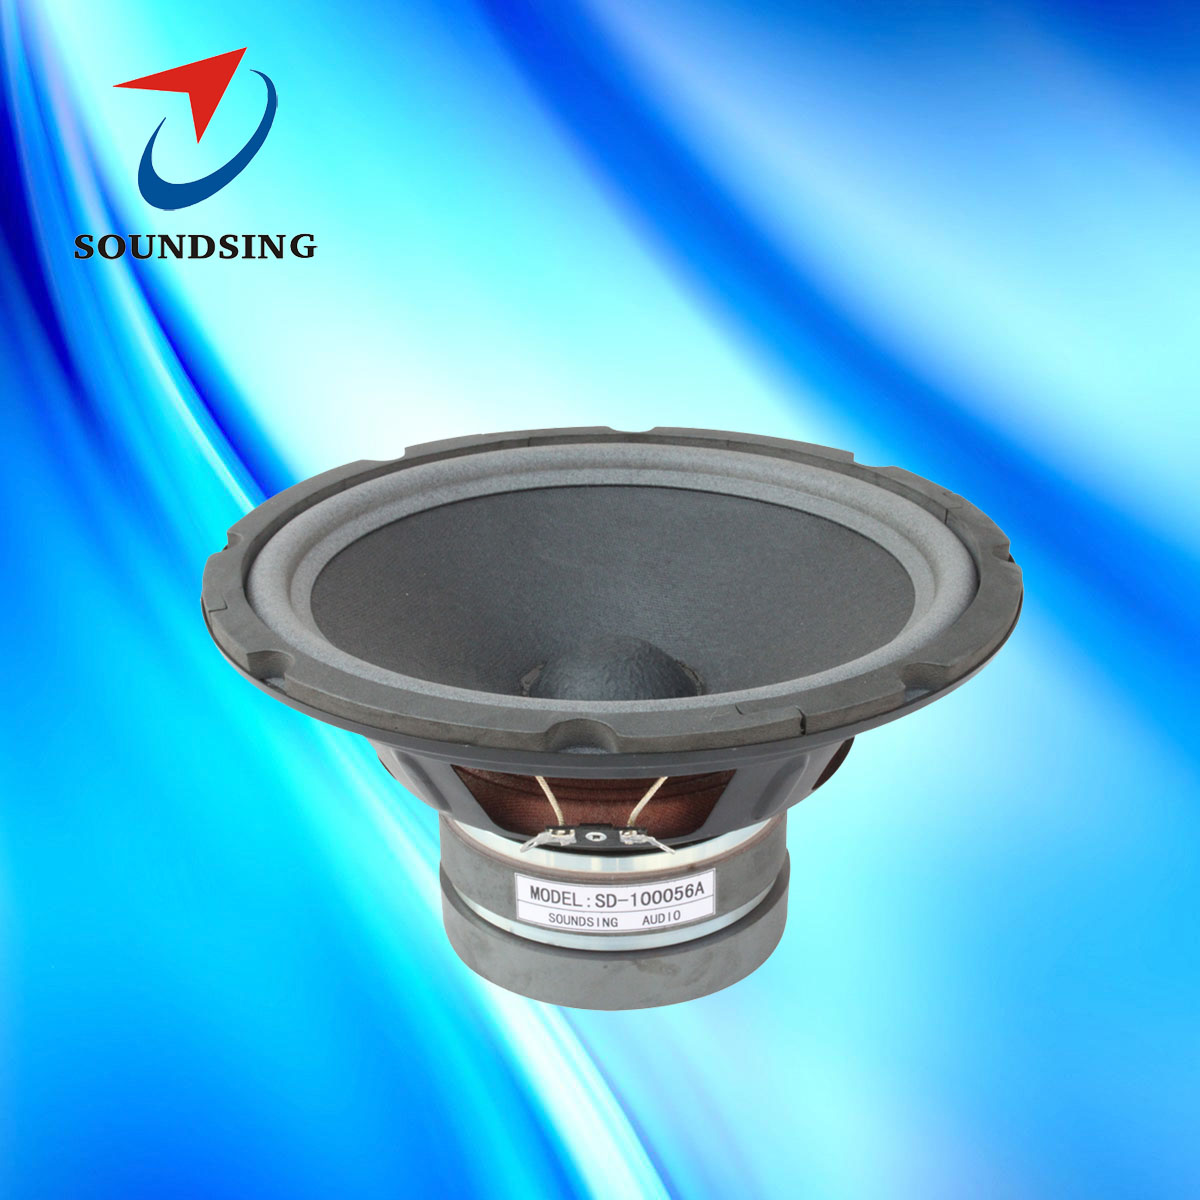 SD-100056A 10 inch karaoke loudspeakers